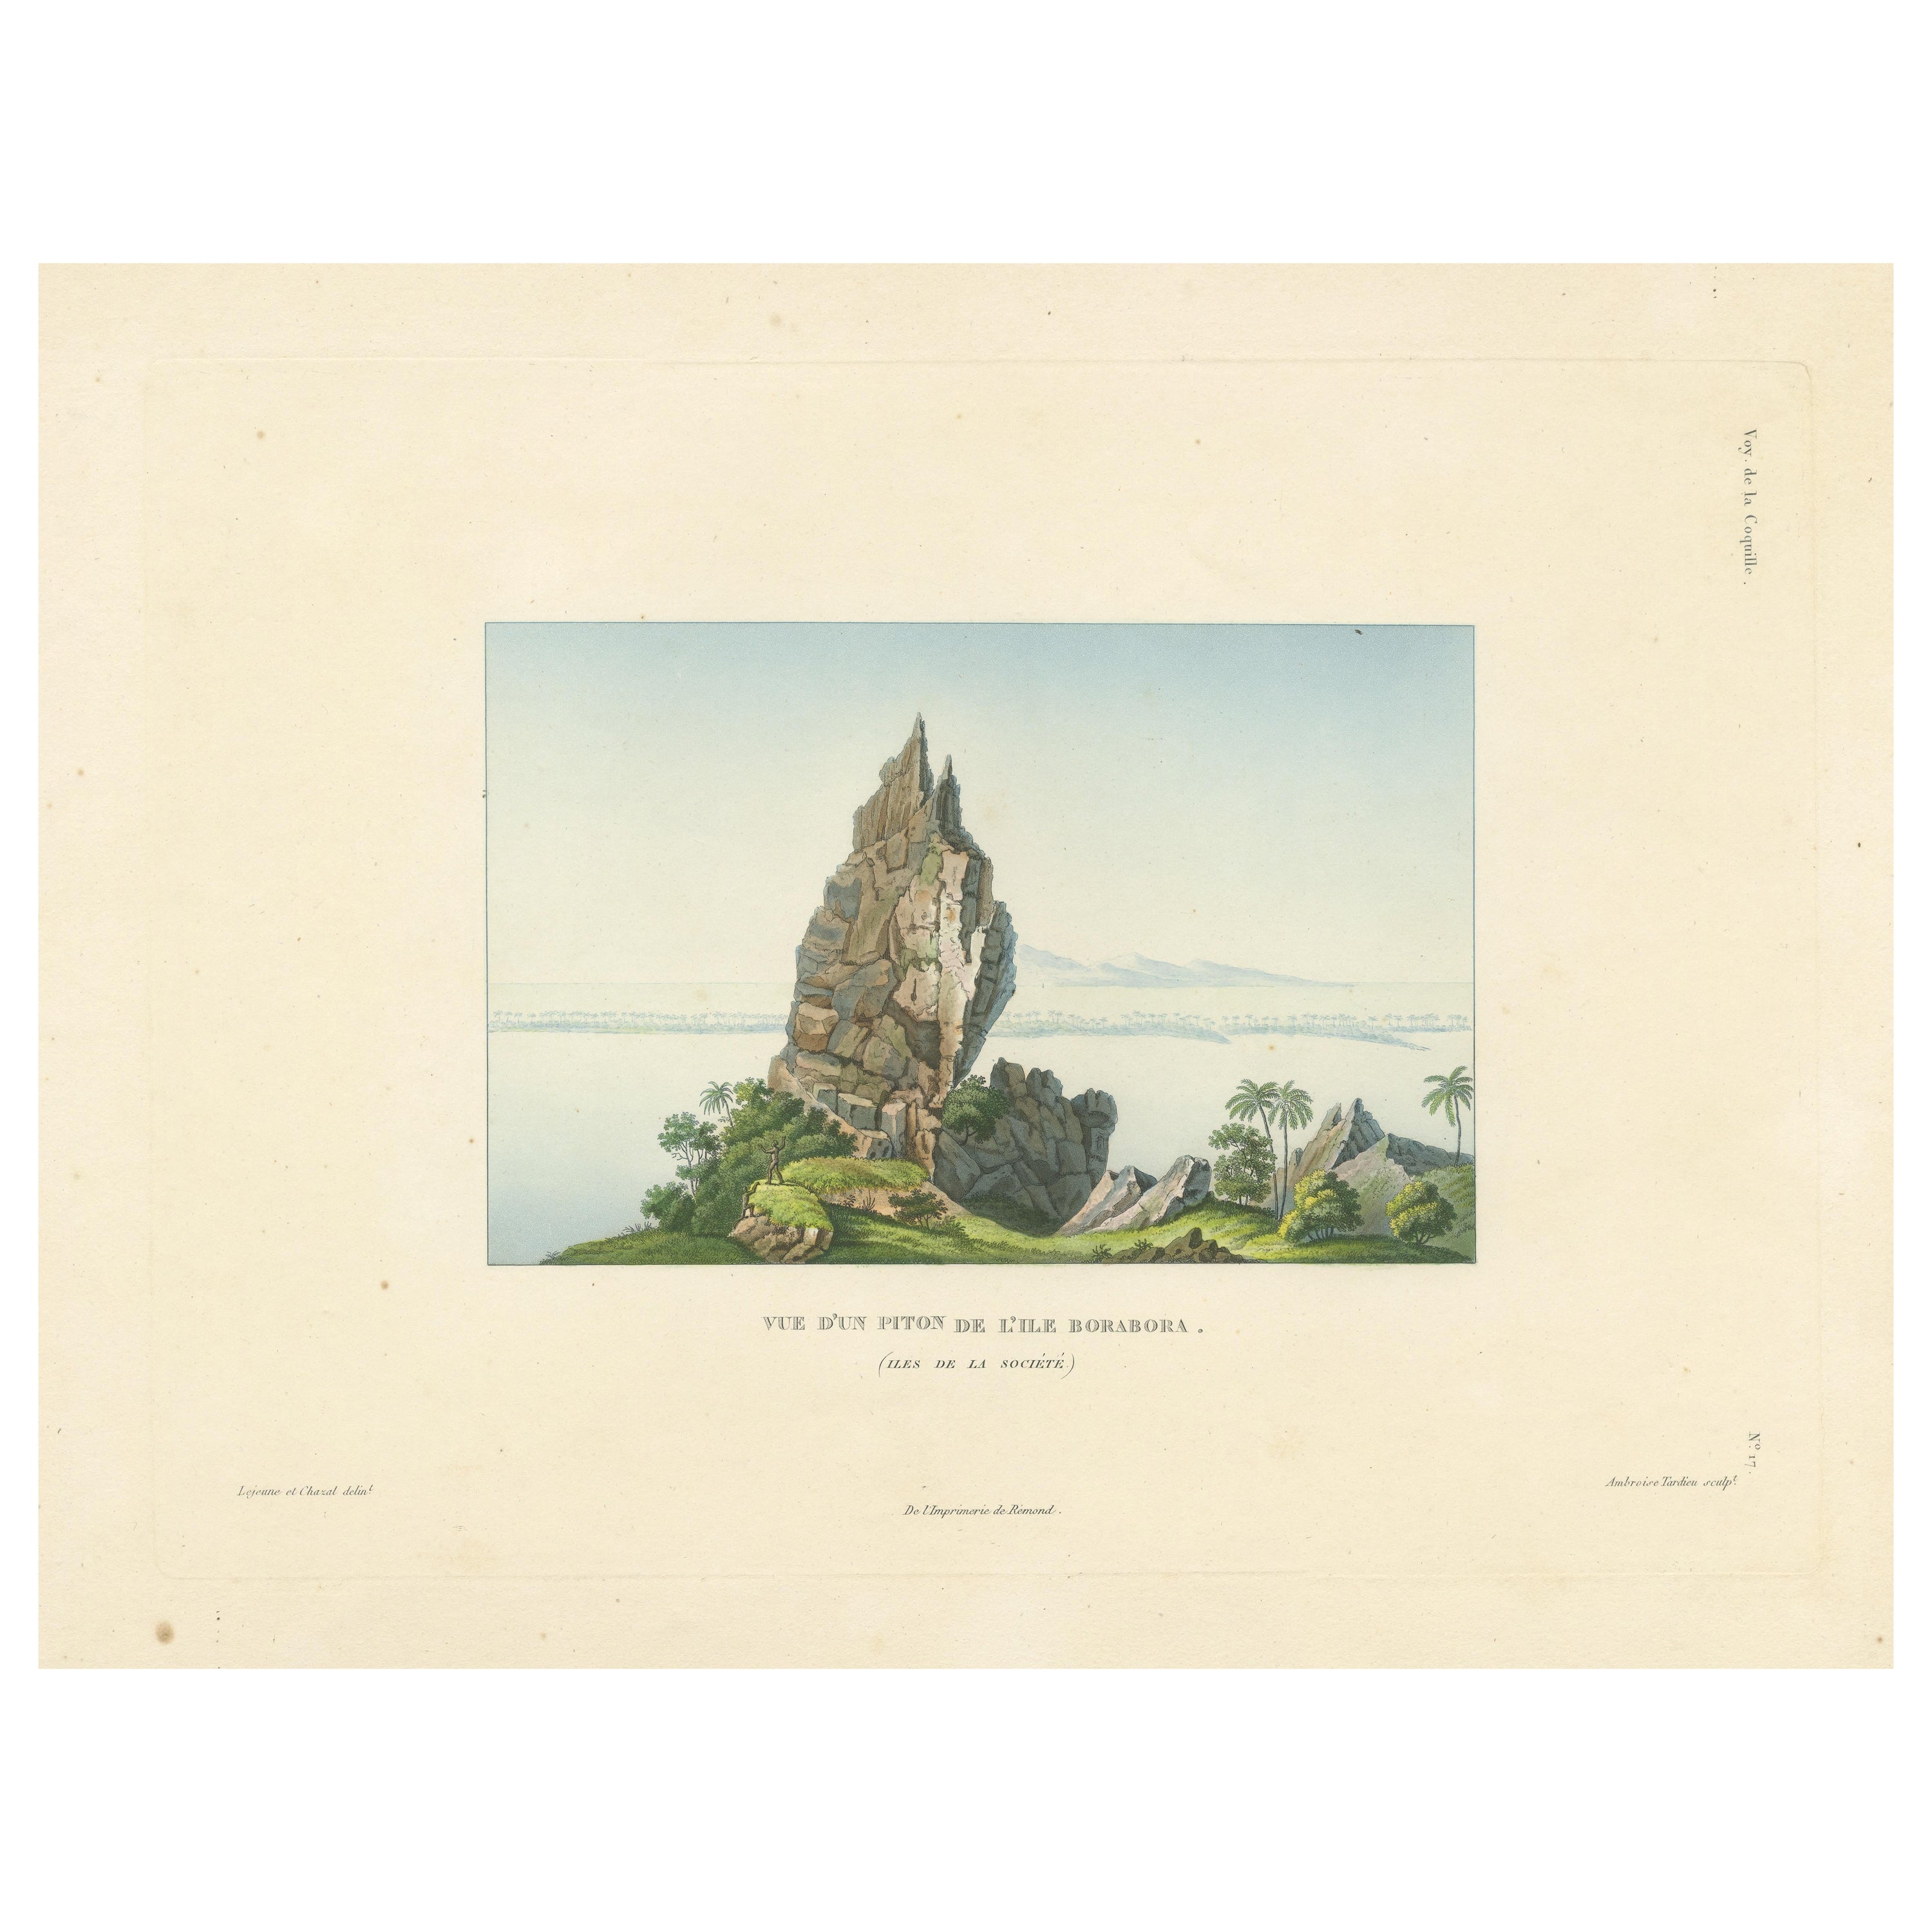 Antique Print of a Peak on Bora Bora Island, Society Islands